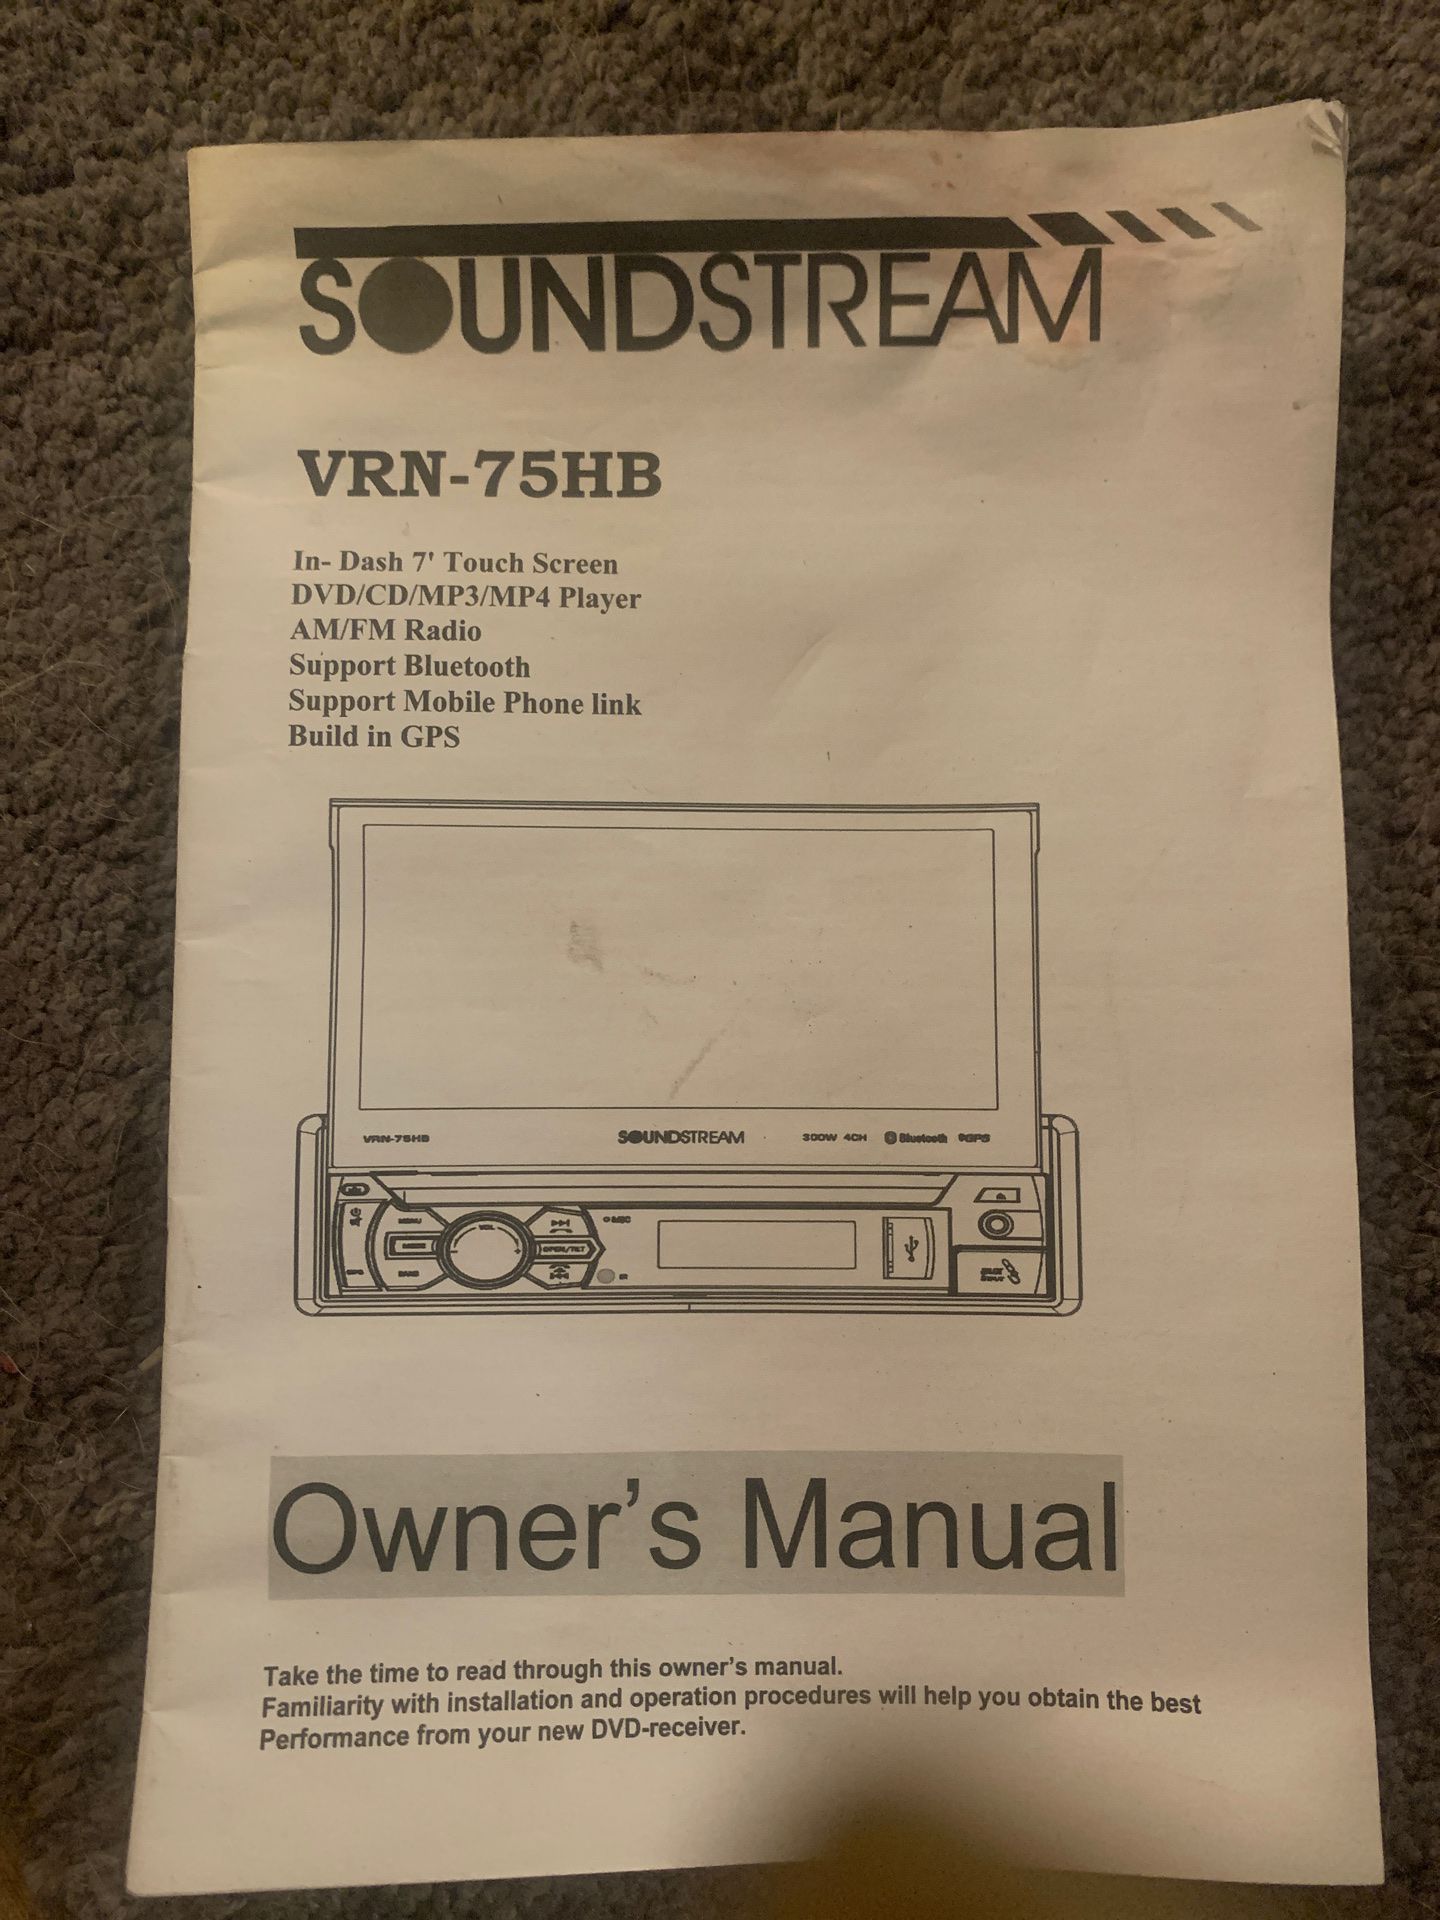 Sound stream VRN-75HB